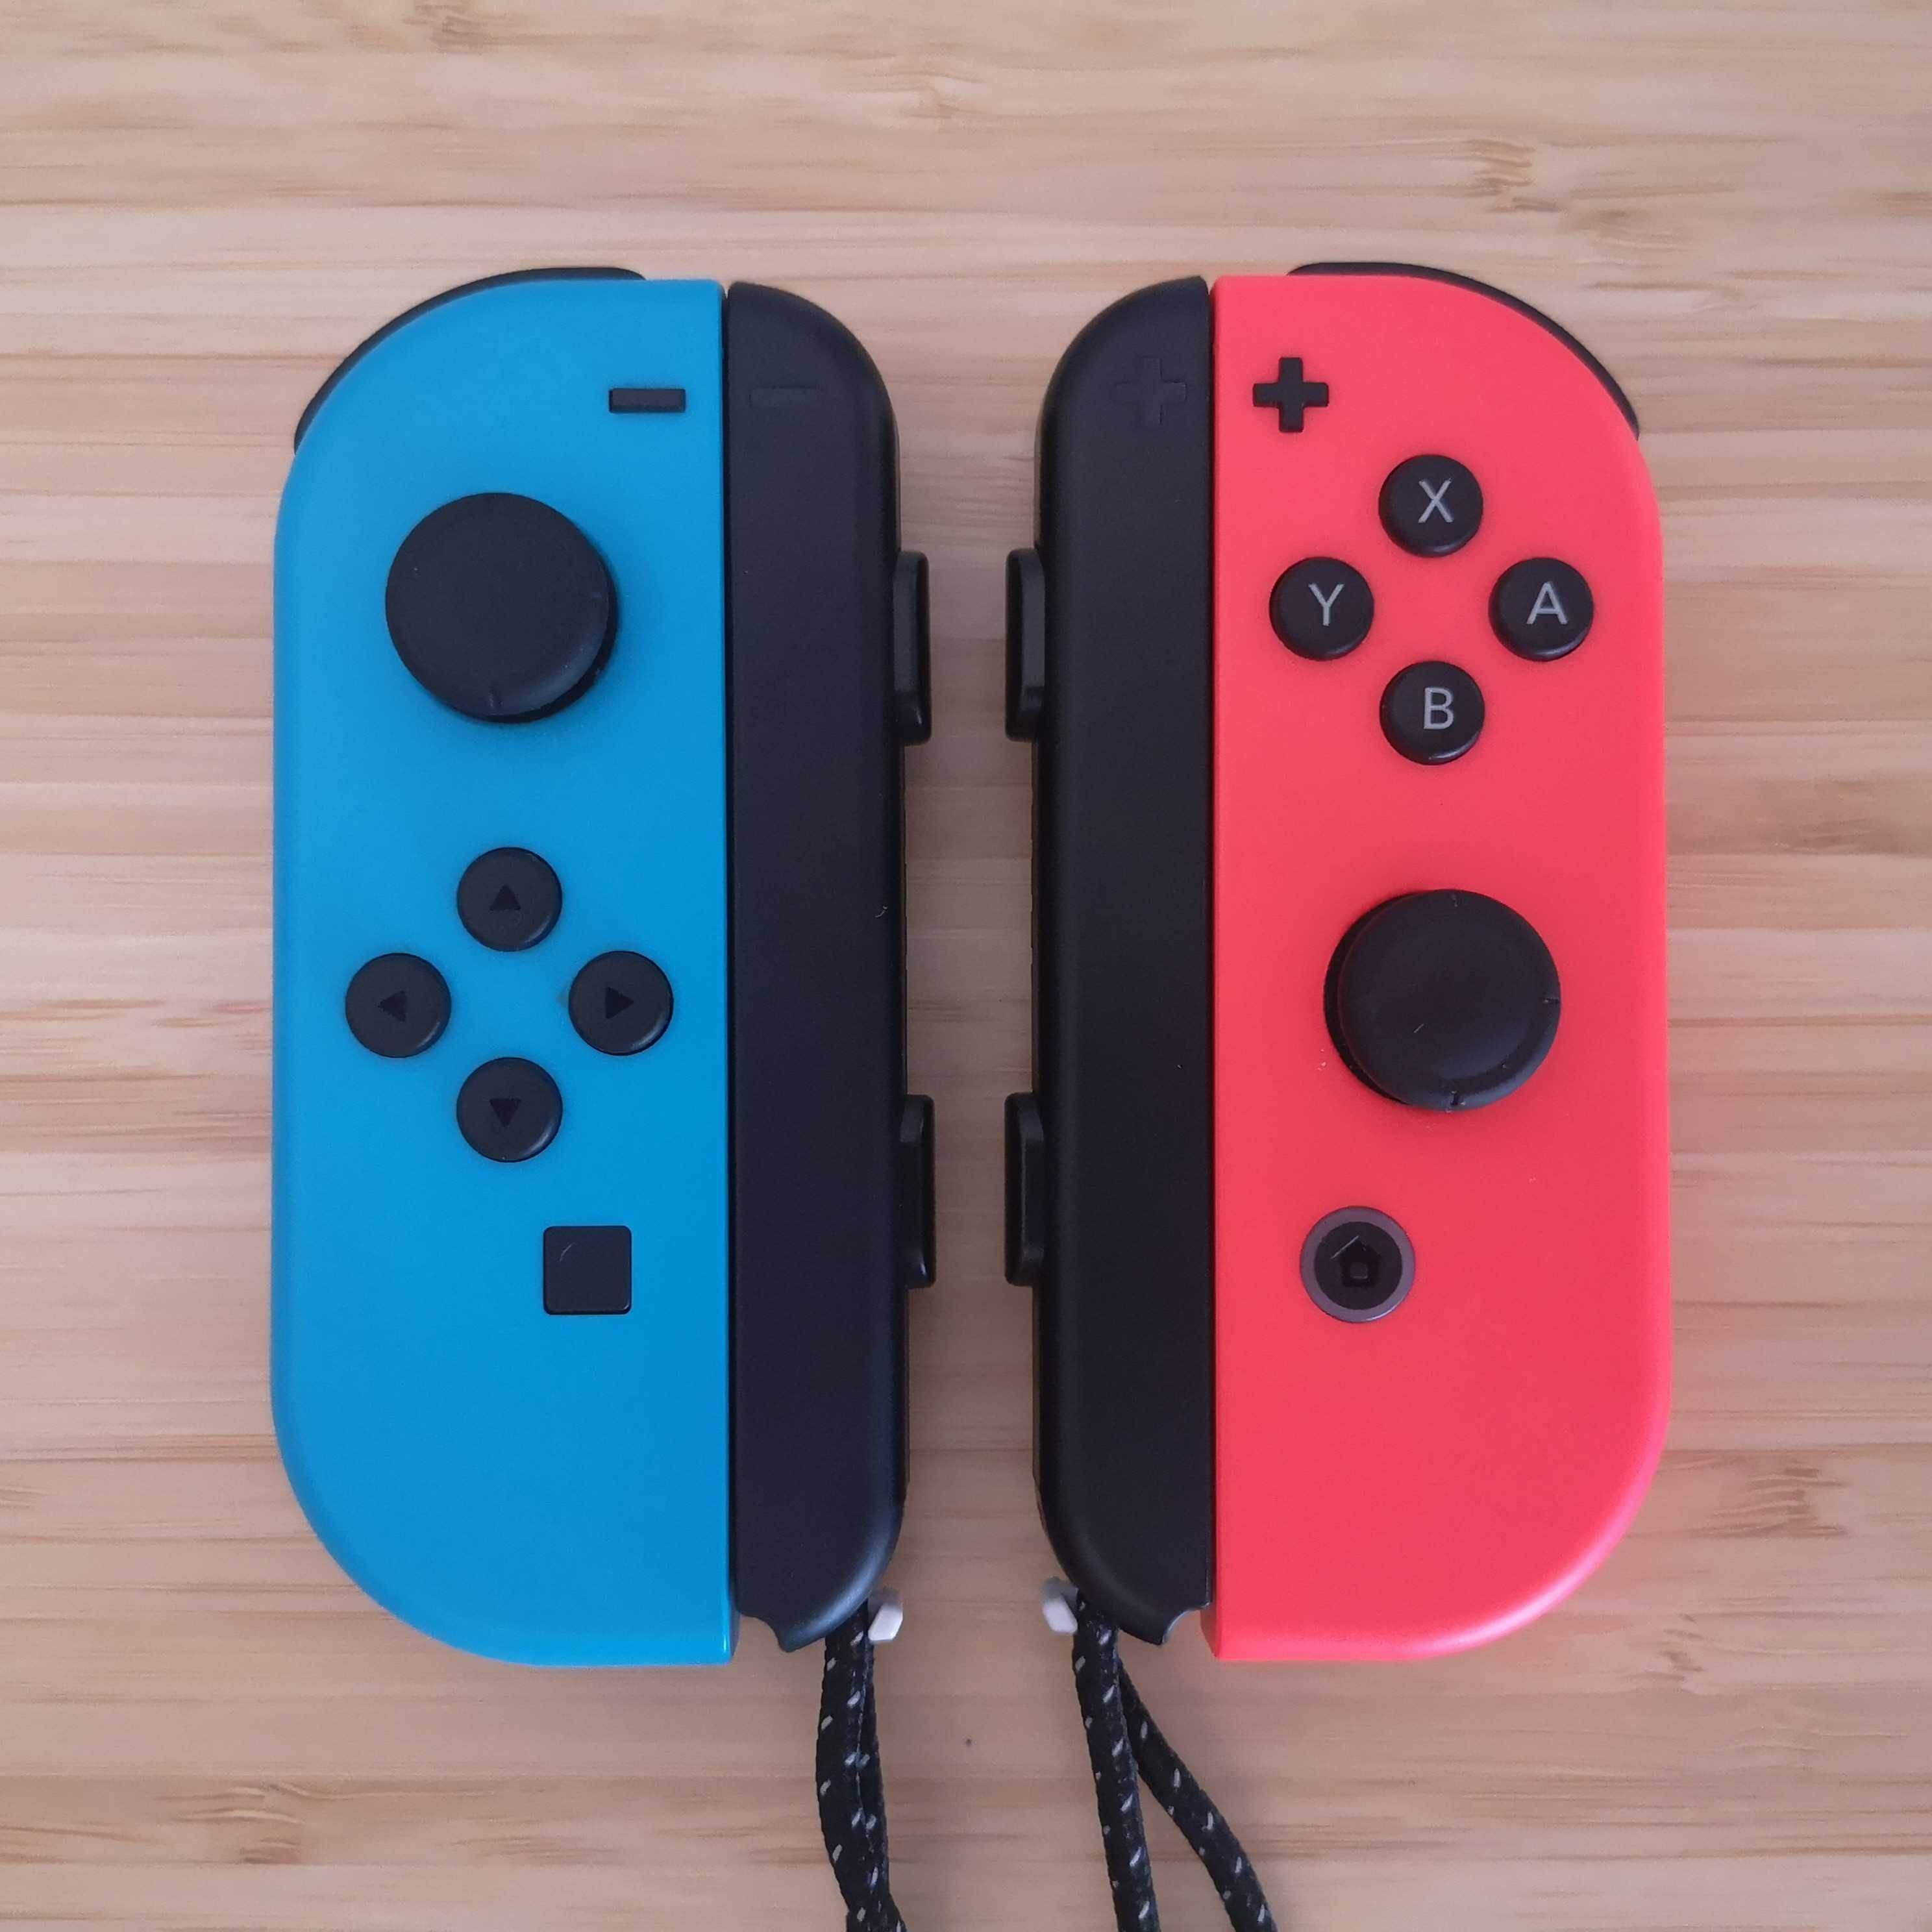 Nintendo Switch Versão OLED